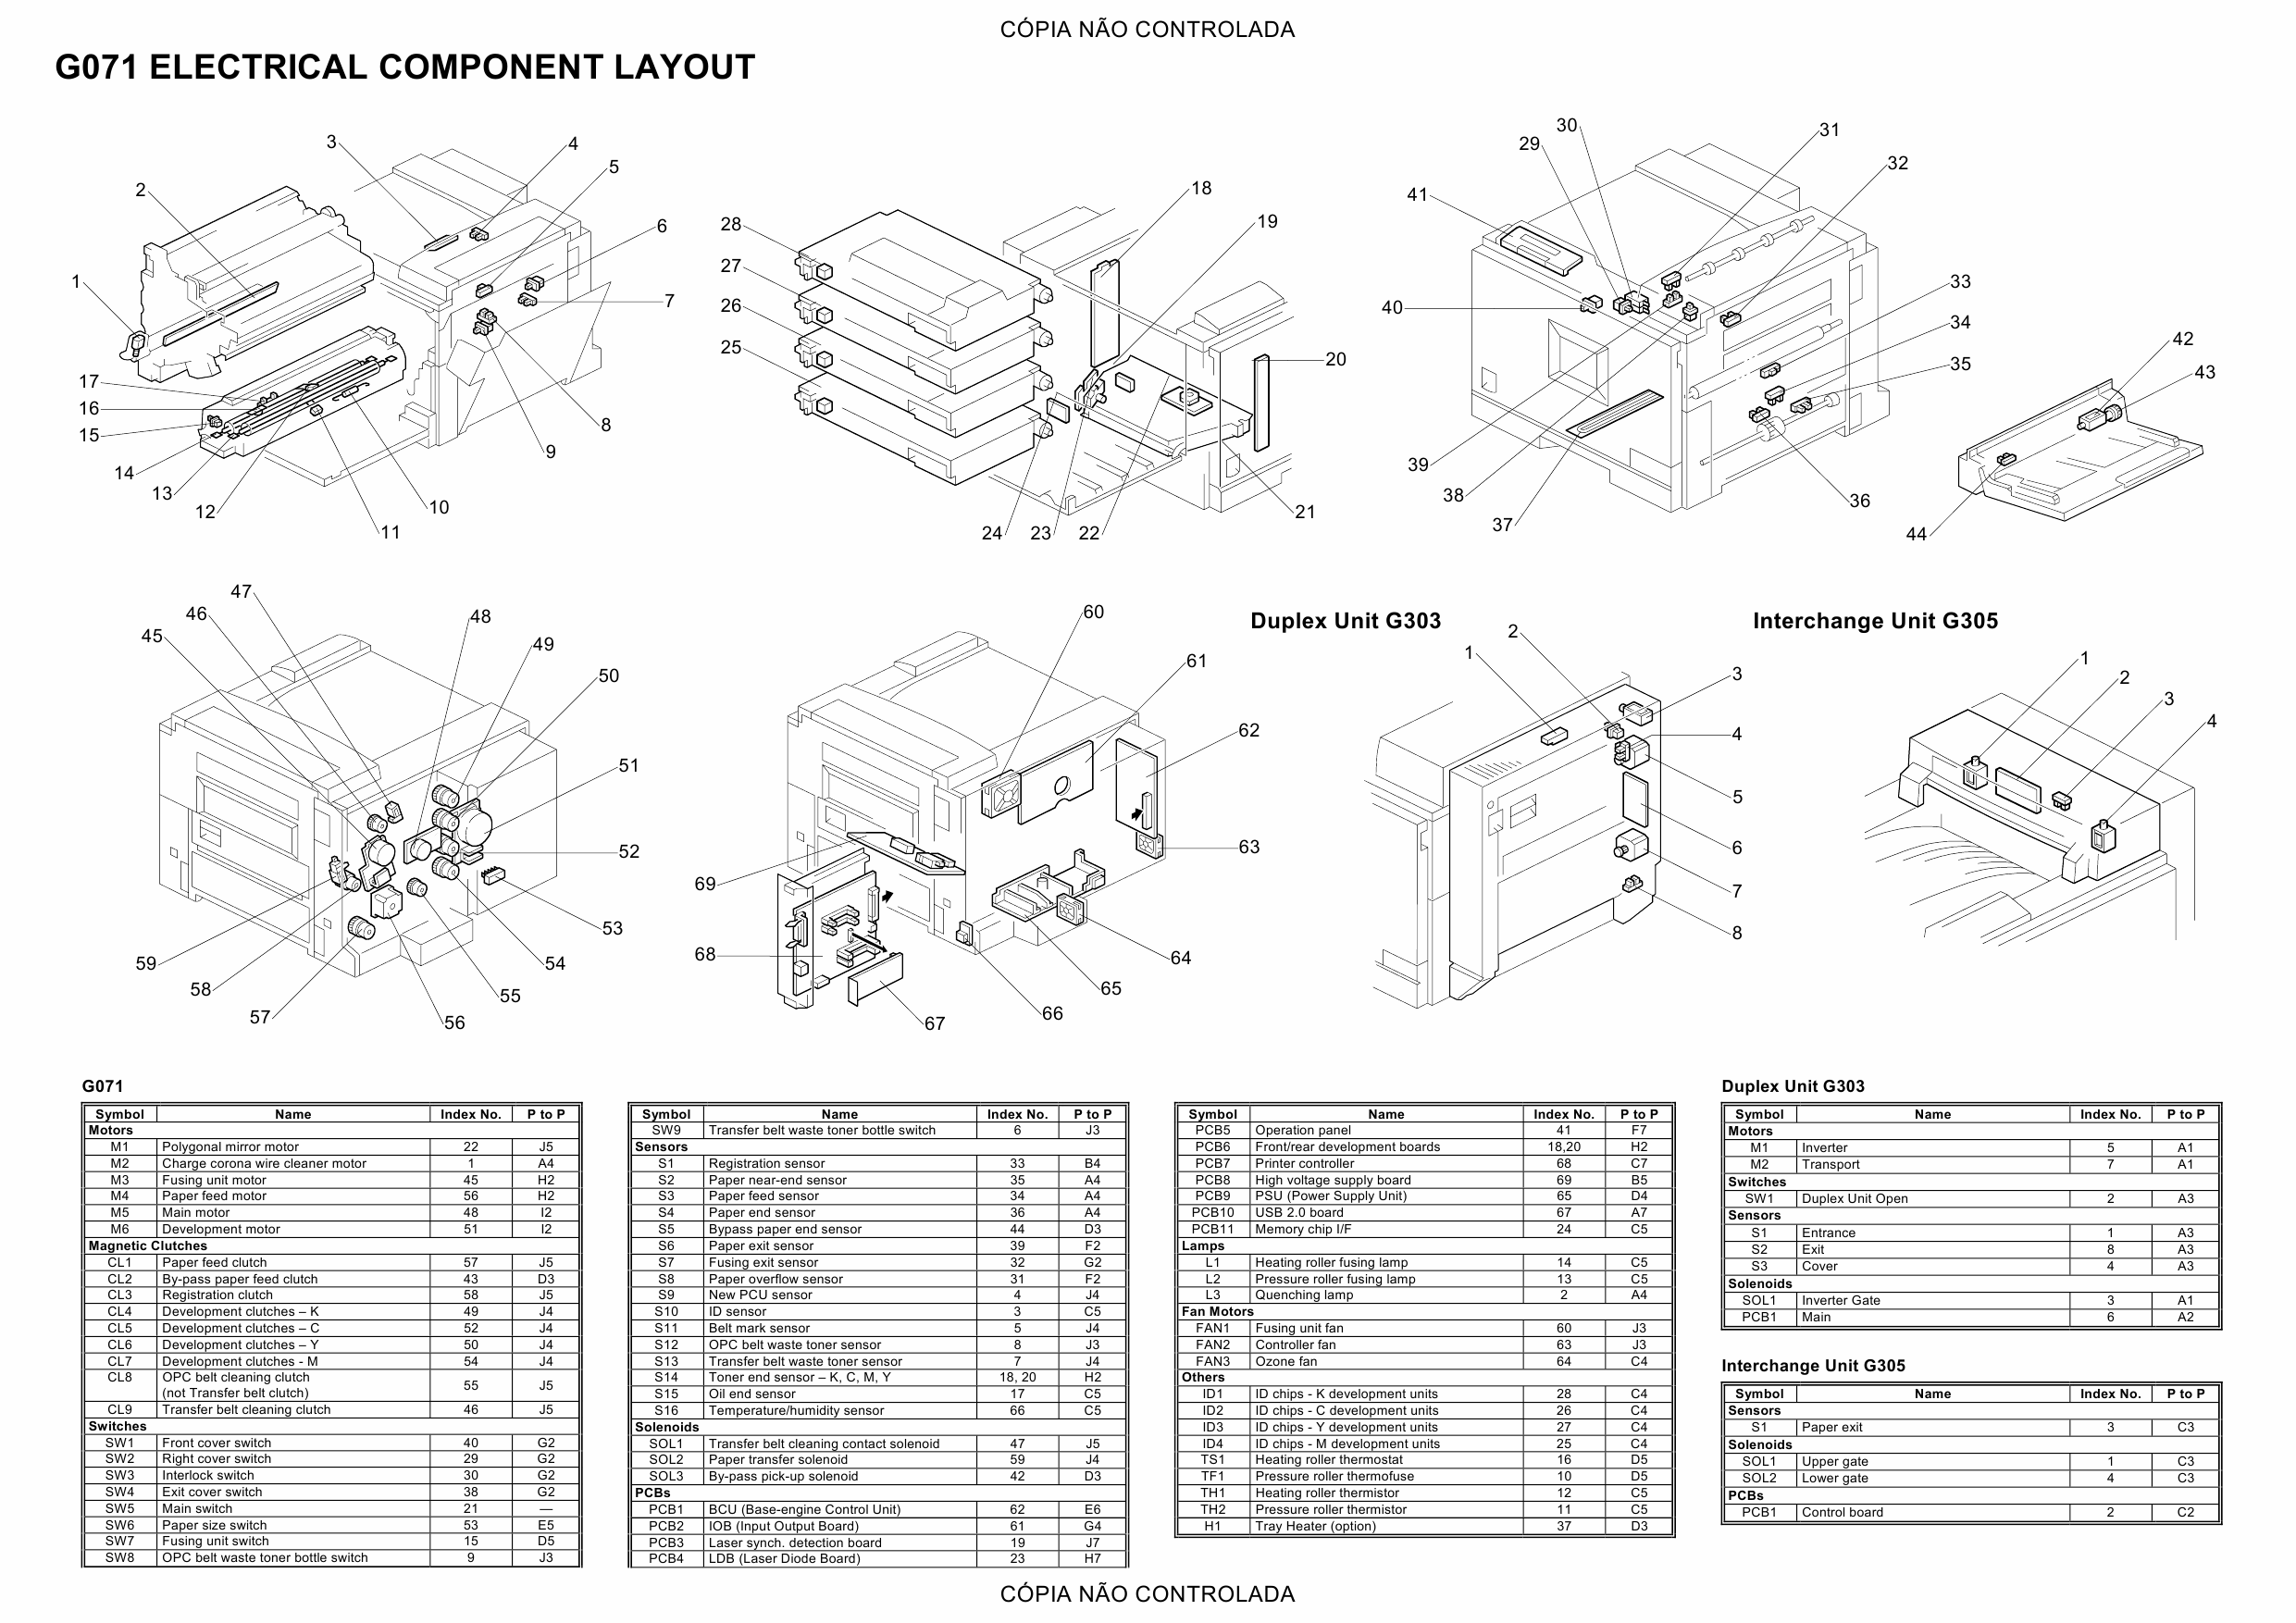 RICOH Aficio CL-5000 G071 Circuit Diagram-2